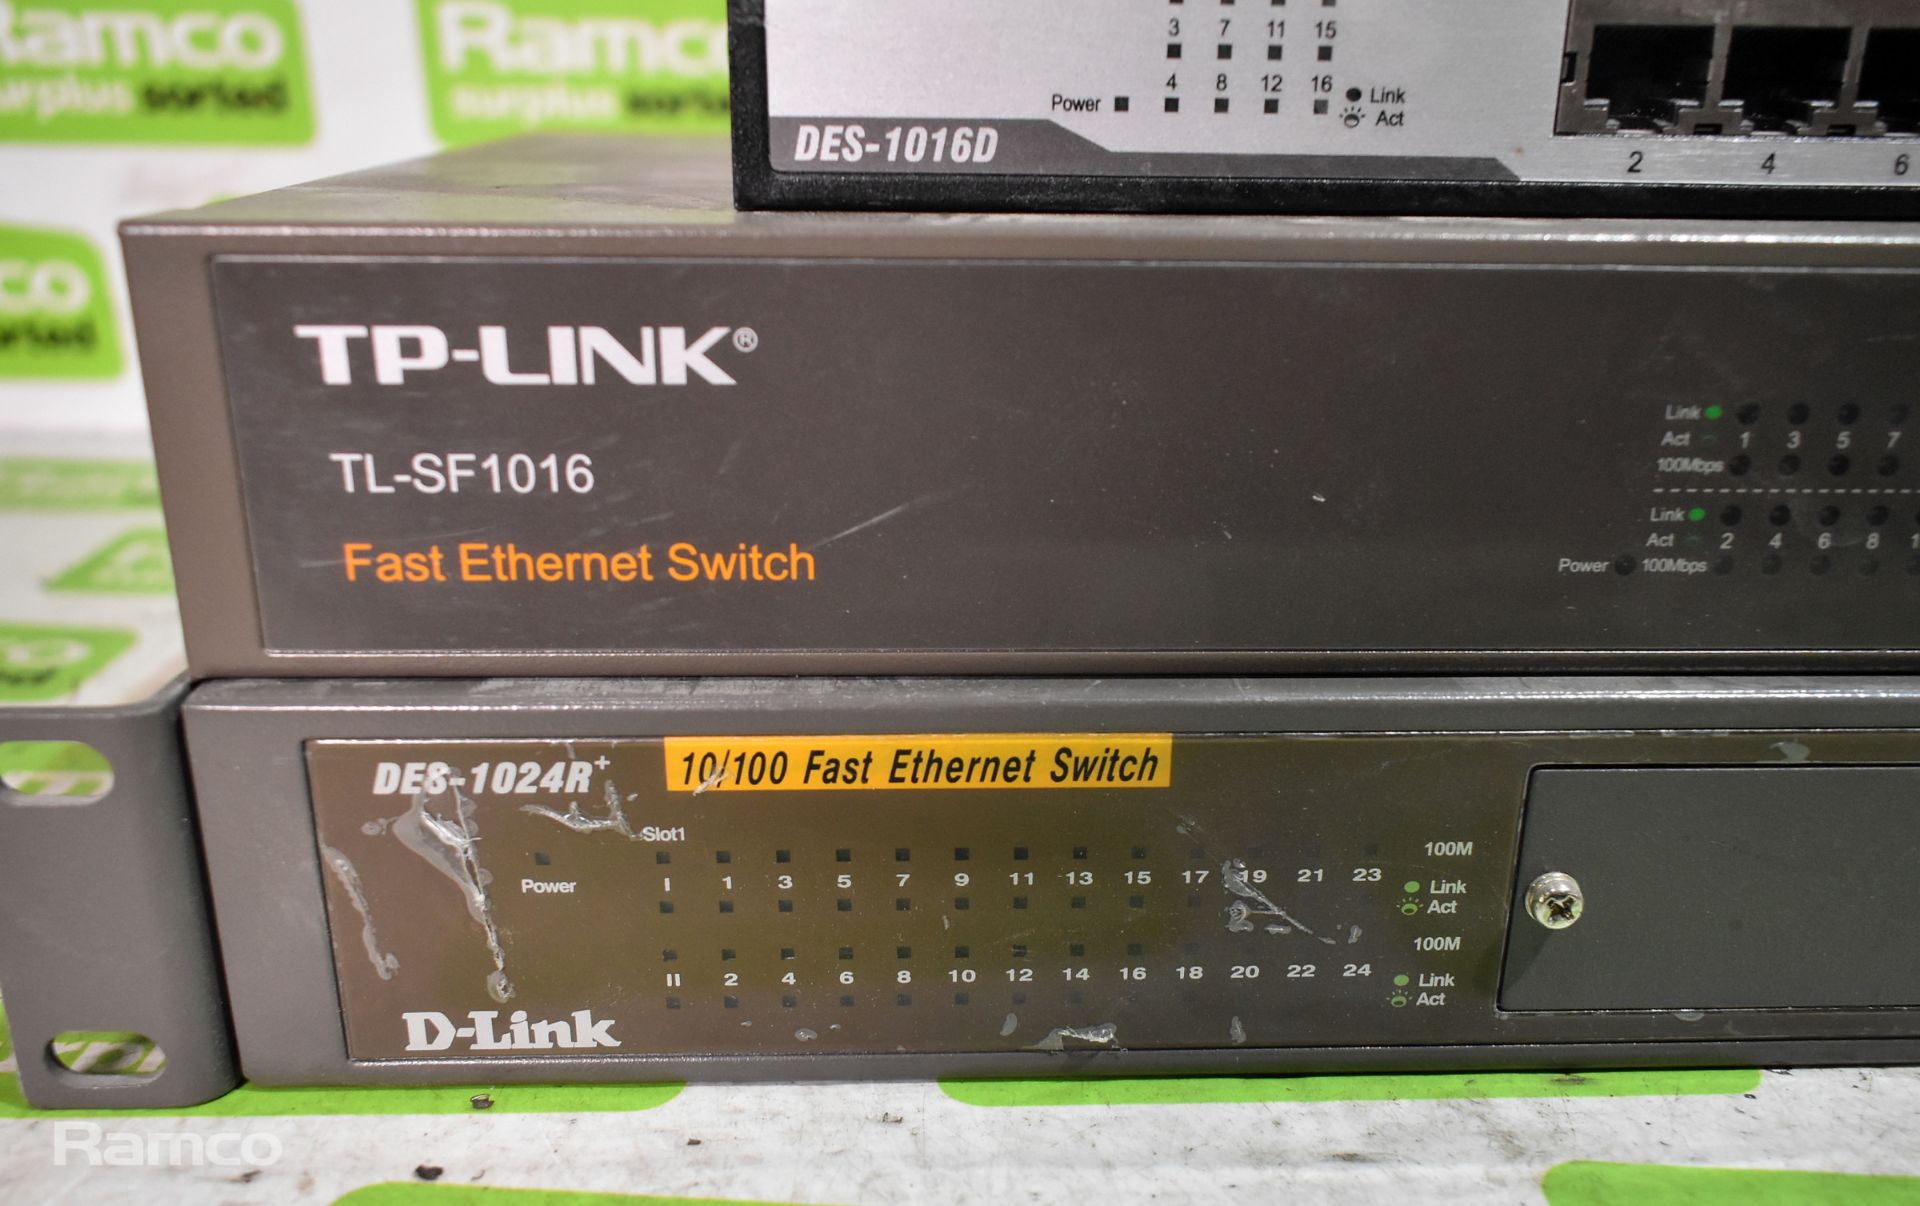 4x Network switches - D-Link DES1016D, Linksys LGS116, TP-Link TL-SF1016, D-Link DES1024R - Image 2 of 7